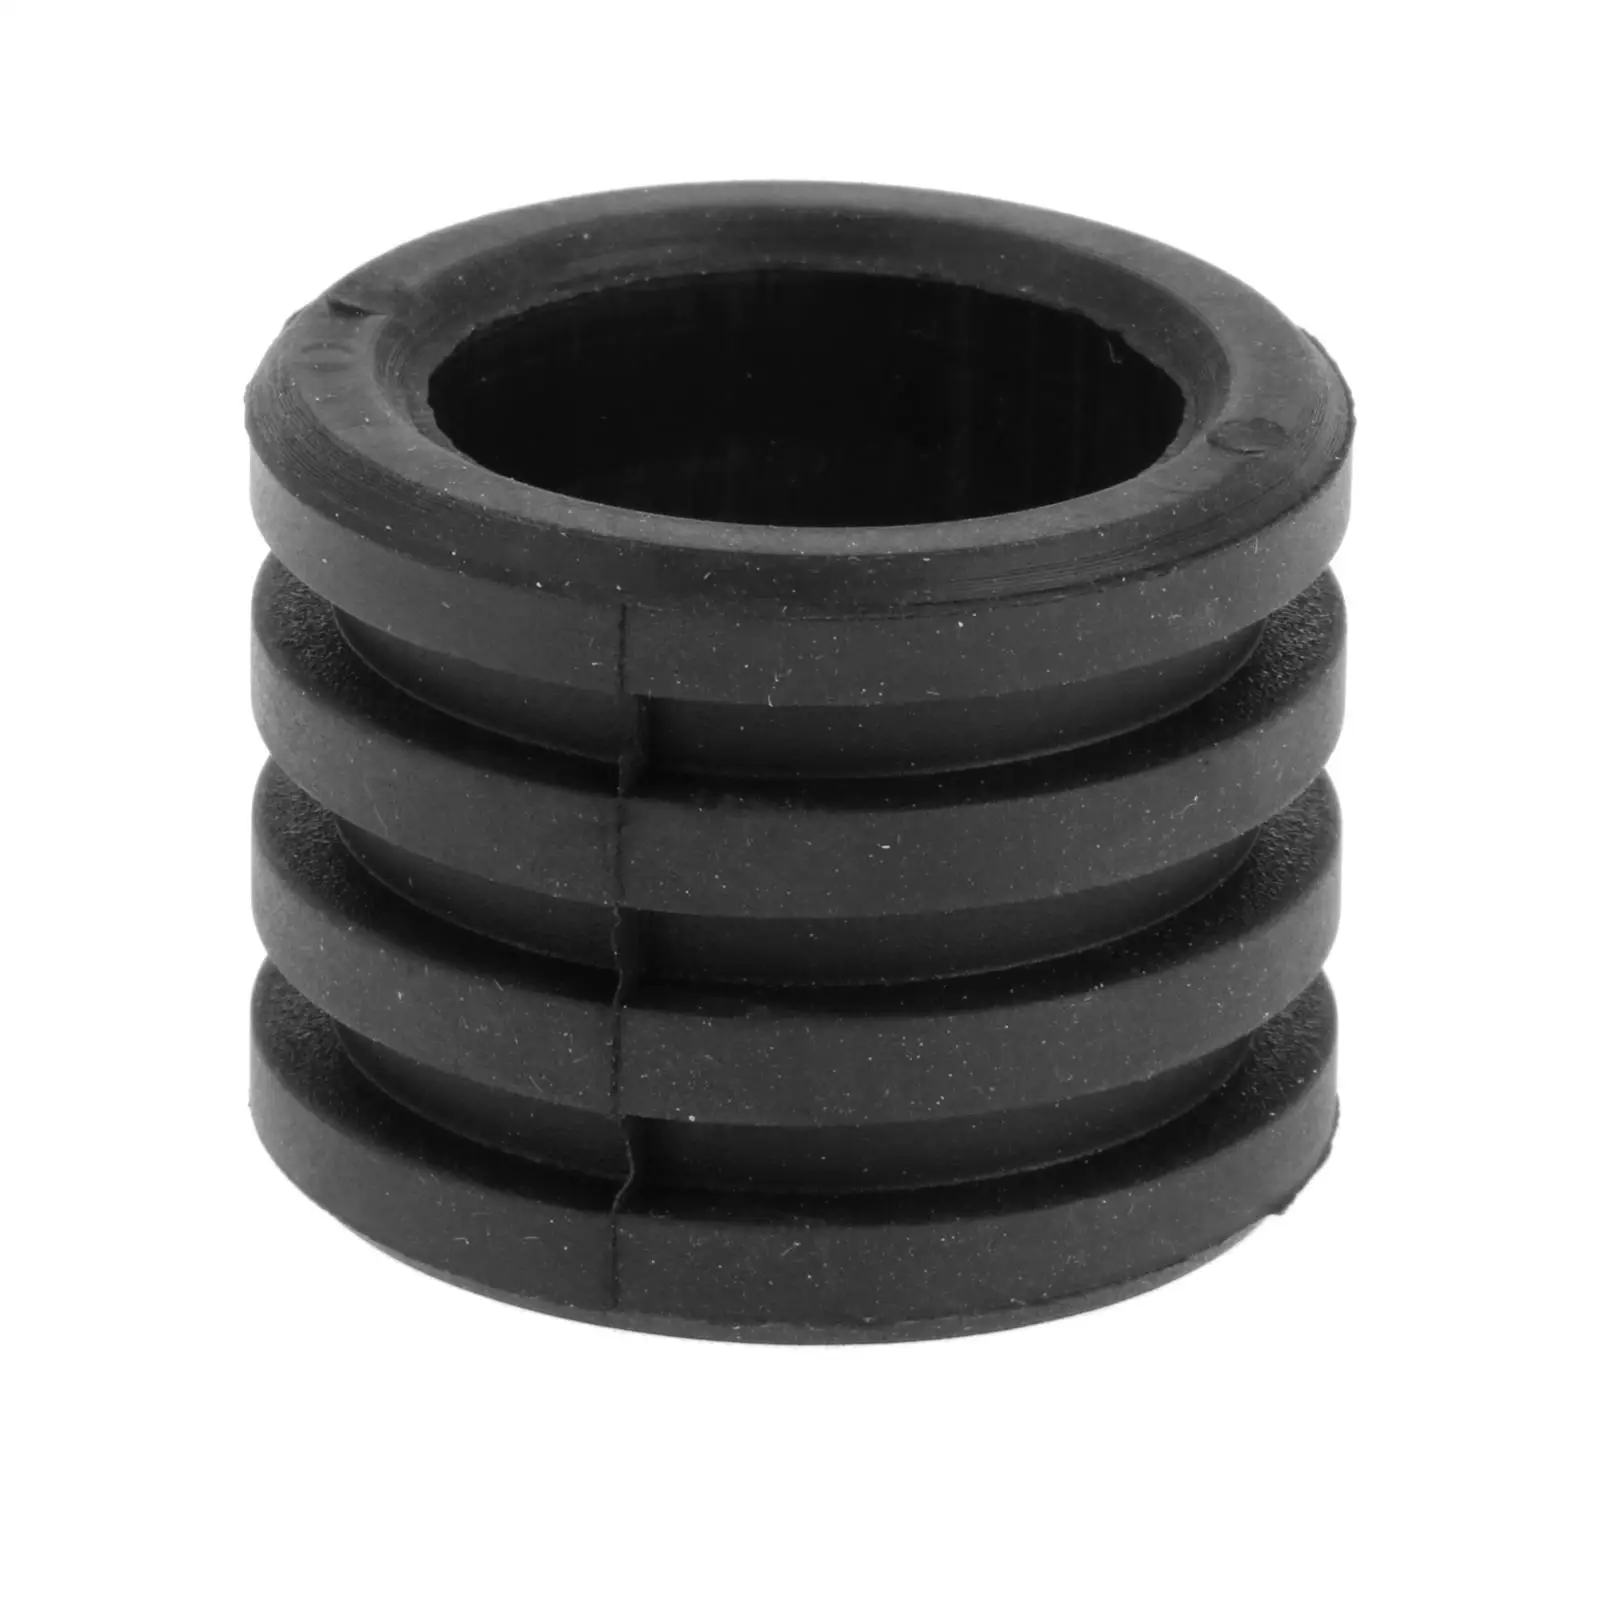 Black Exhaust Gasket Rubber Flange for 18365 KA4 730 Accessories